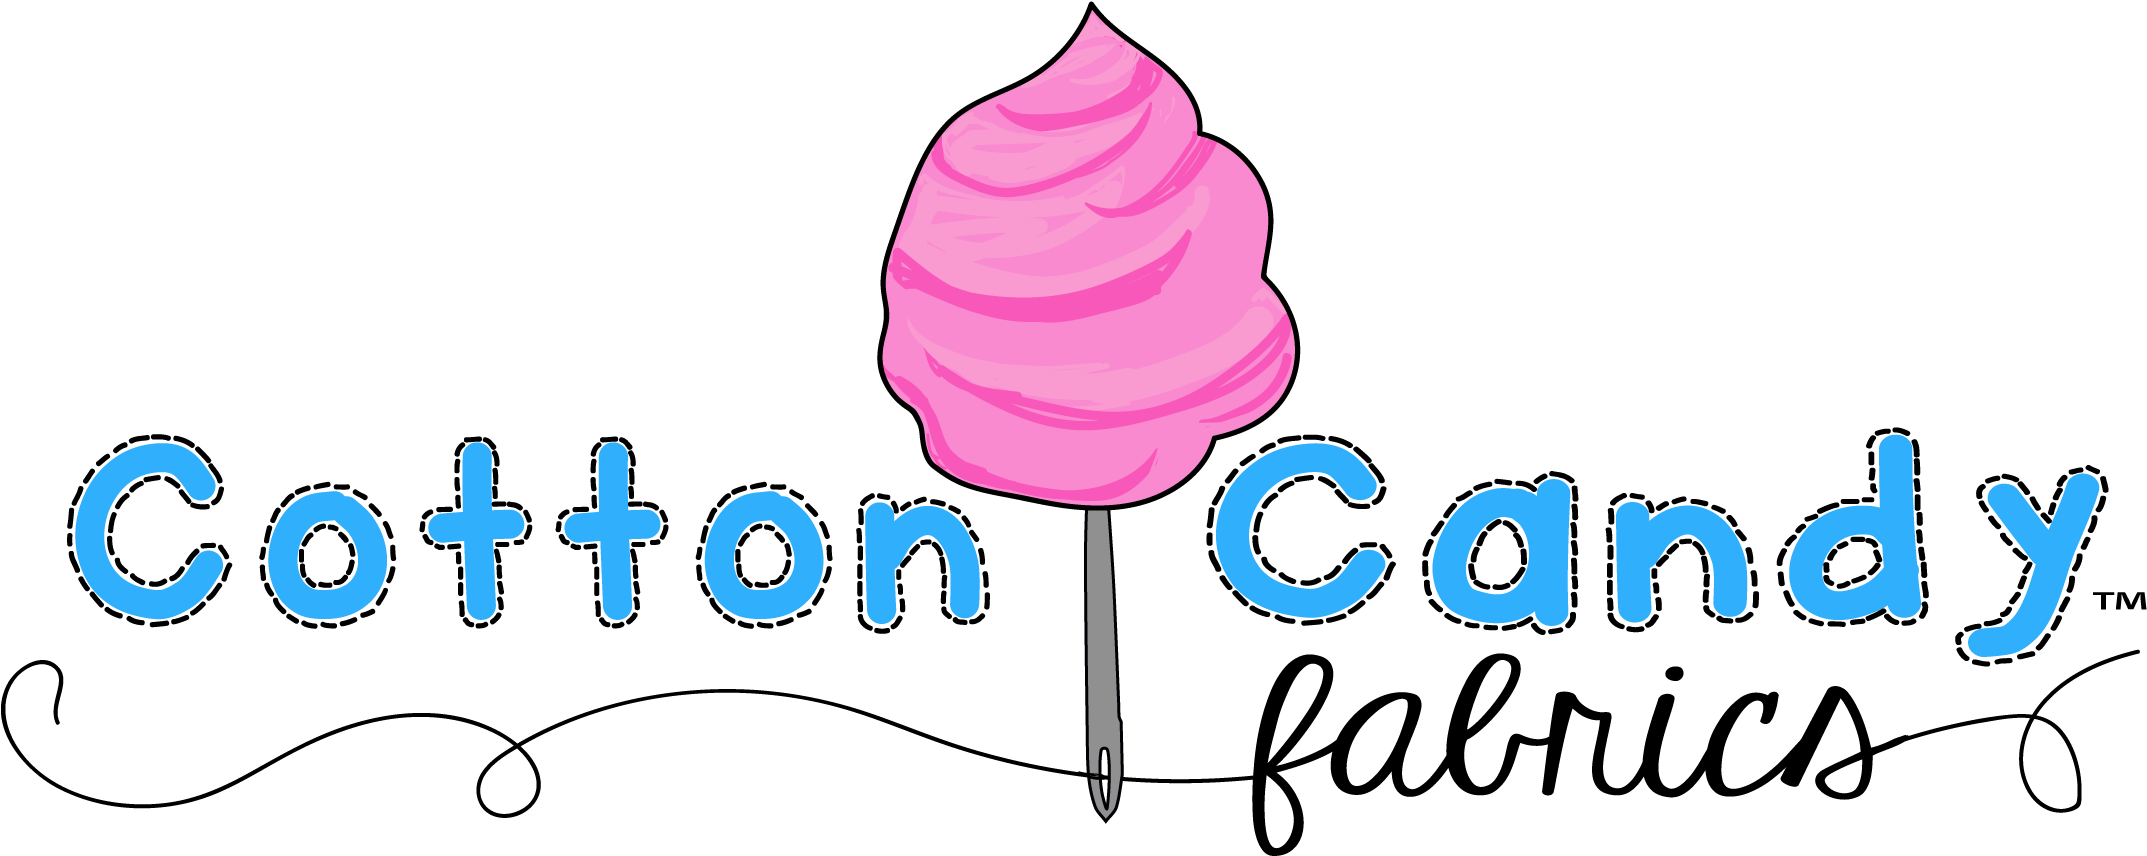 Babies - Cotton Candy Logo Png (2332x1021)